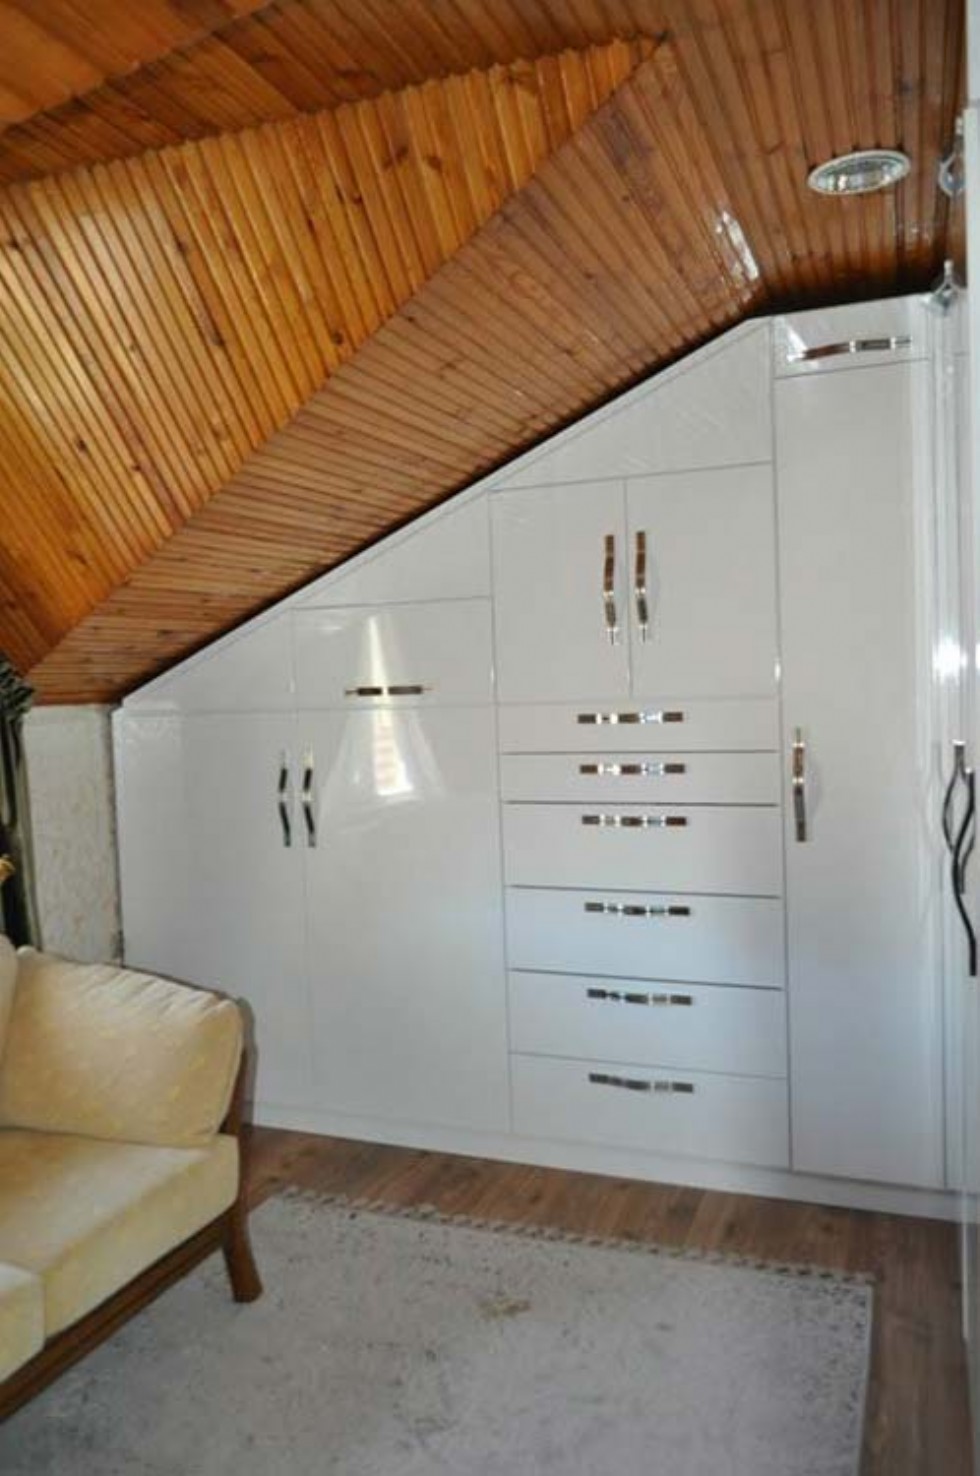 Kodu: 13069 - Elevating Design: Stylish Under Stairs Furniture Cabinets